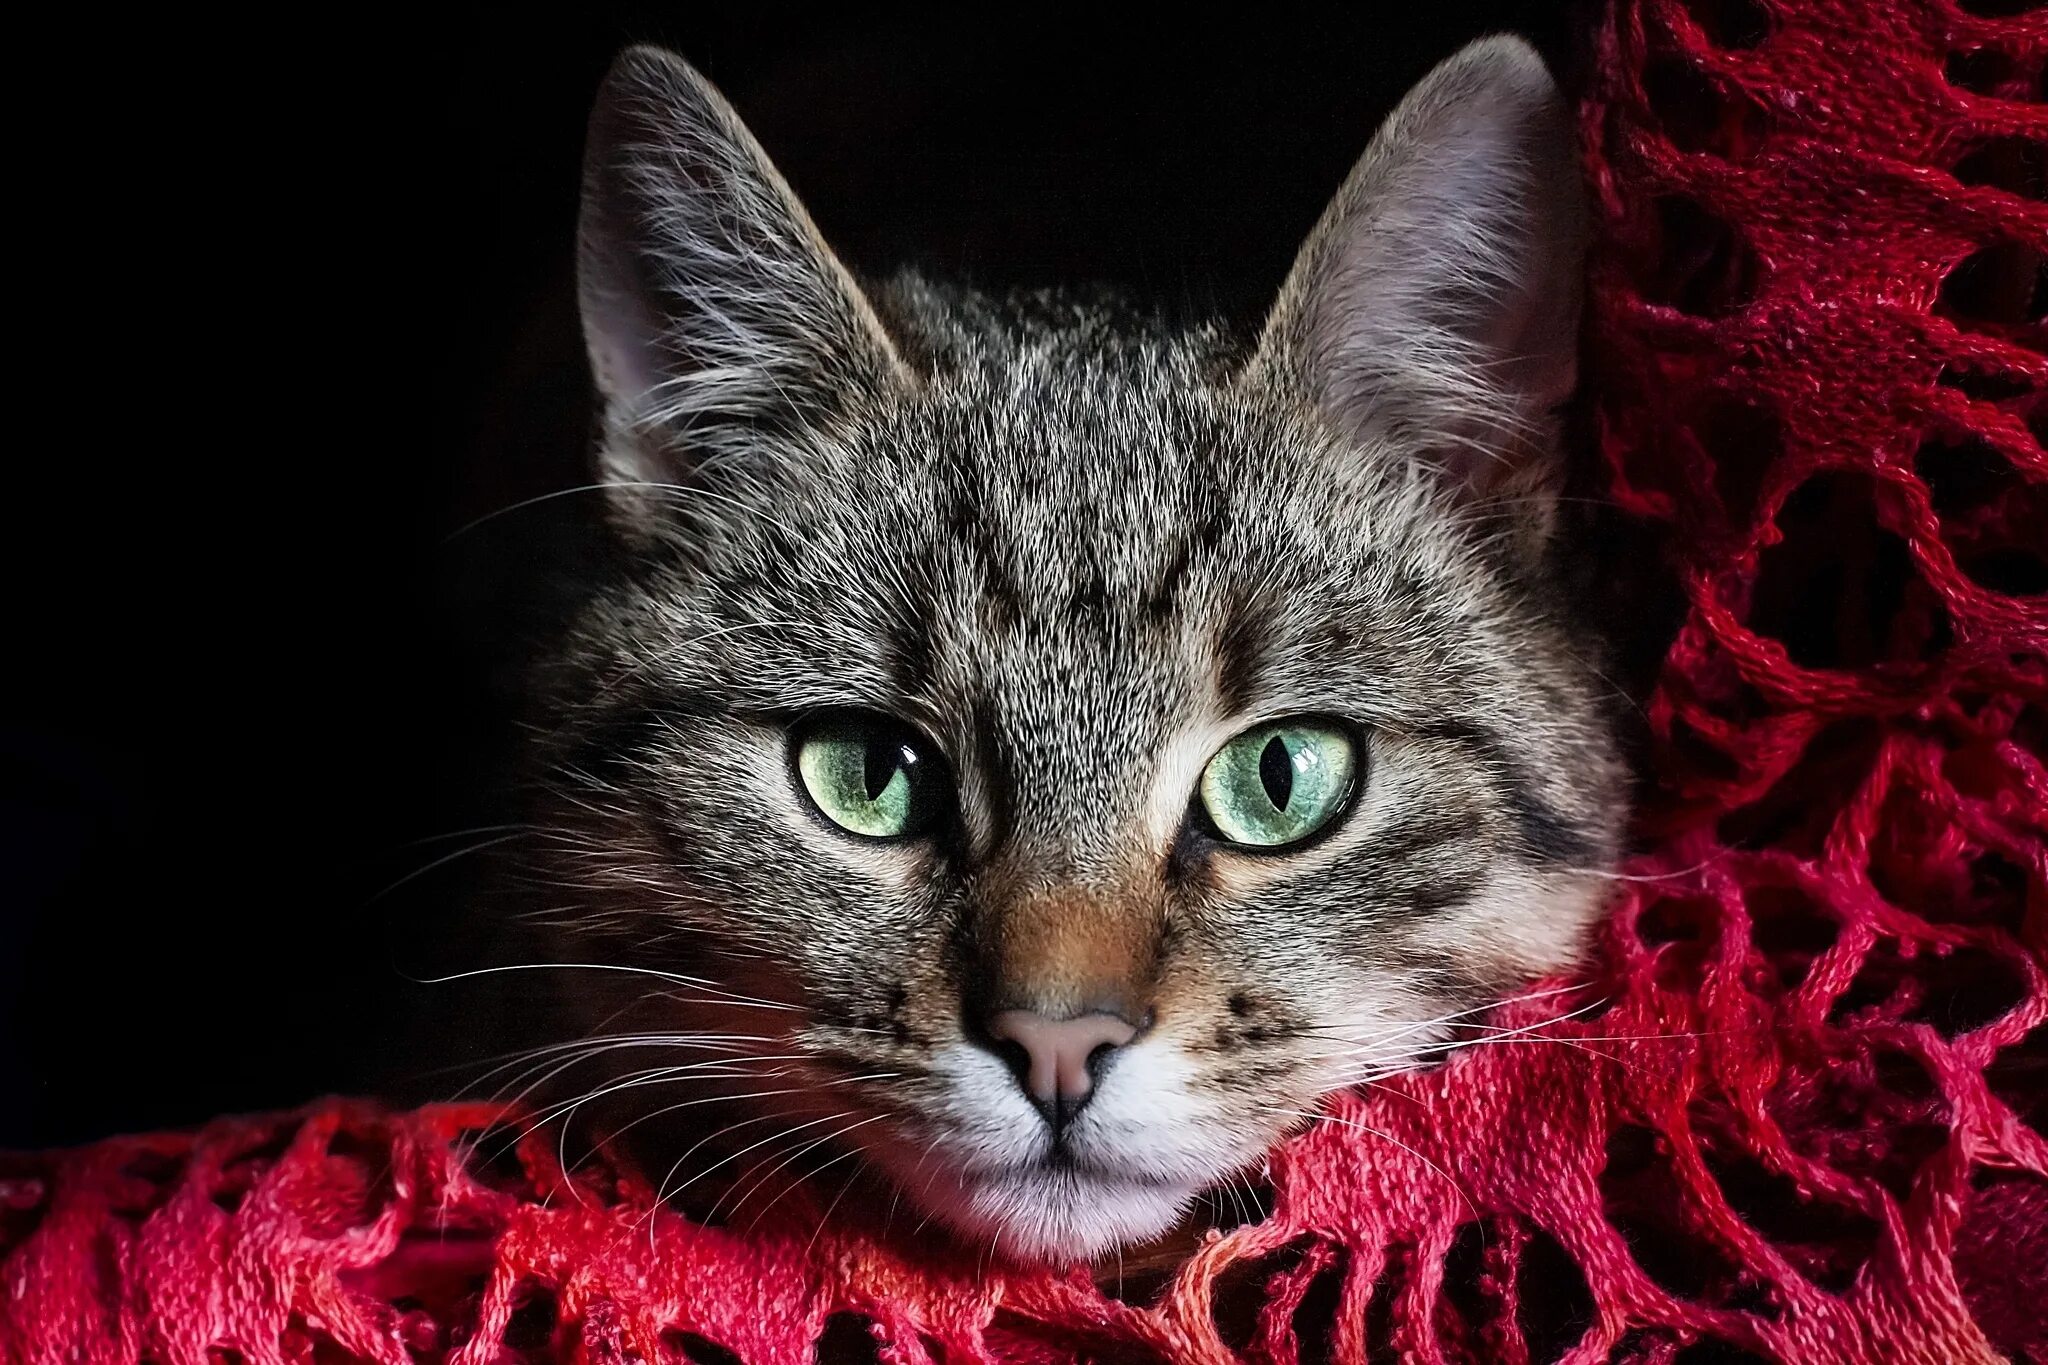 Cats me red. Красивые кошки. Красивая морда кошки. Кошка с зелеными глазами. Кошачья мордочка.